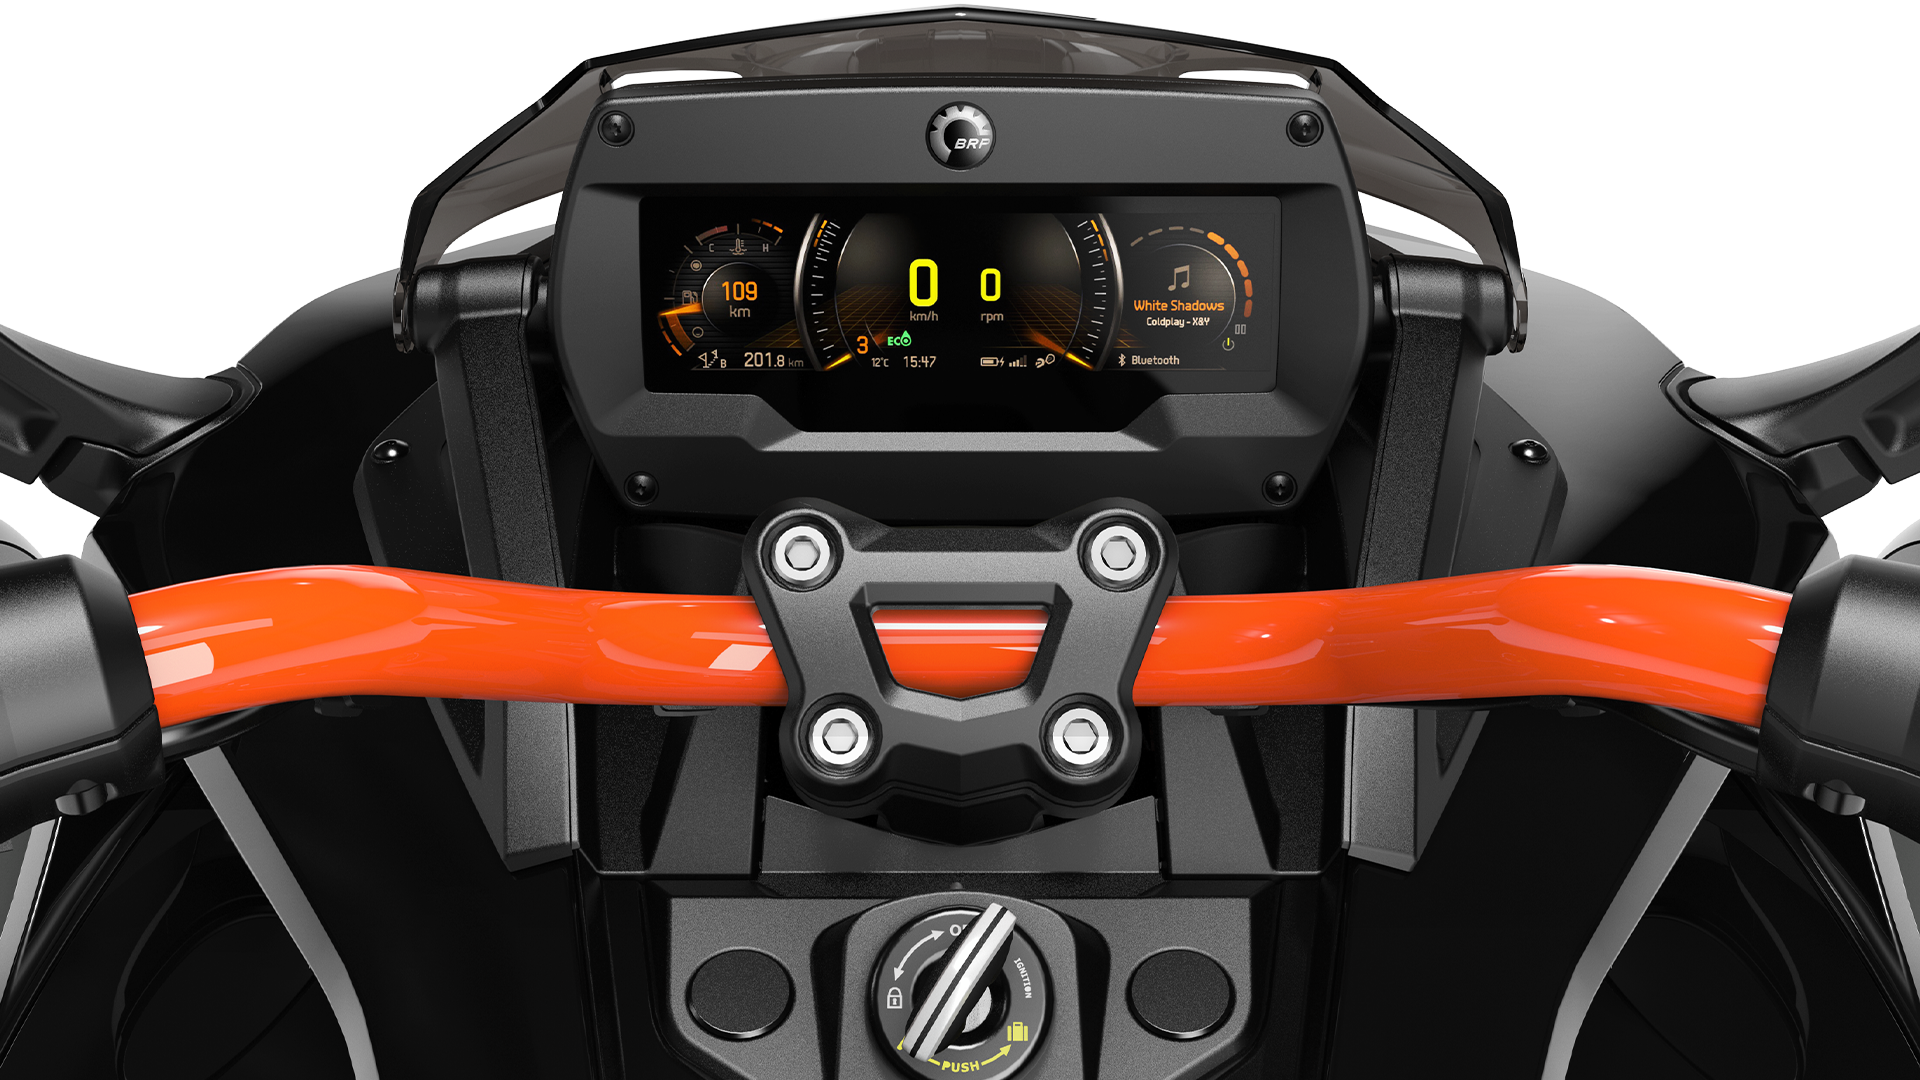 Pantalla LCD panorámica de la serie Spyder F3-S Special